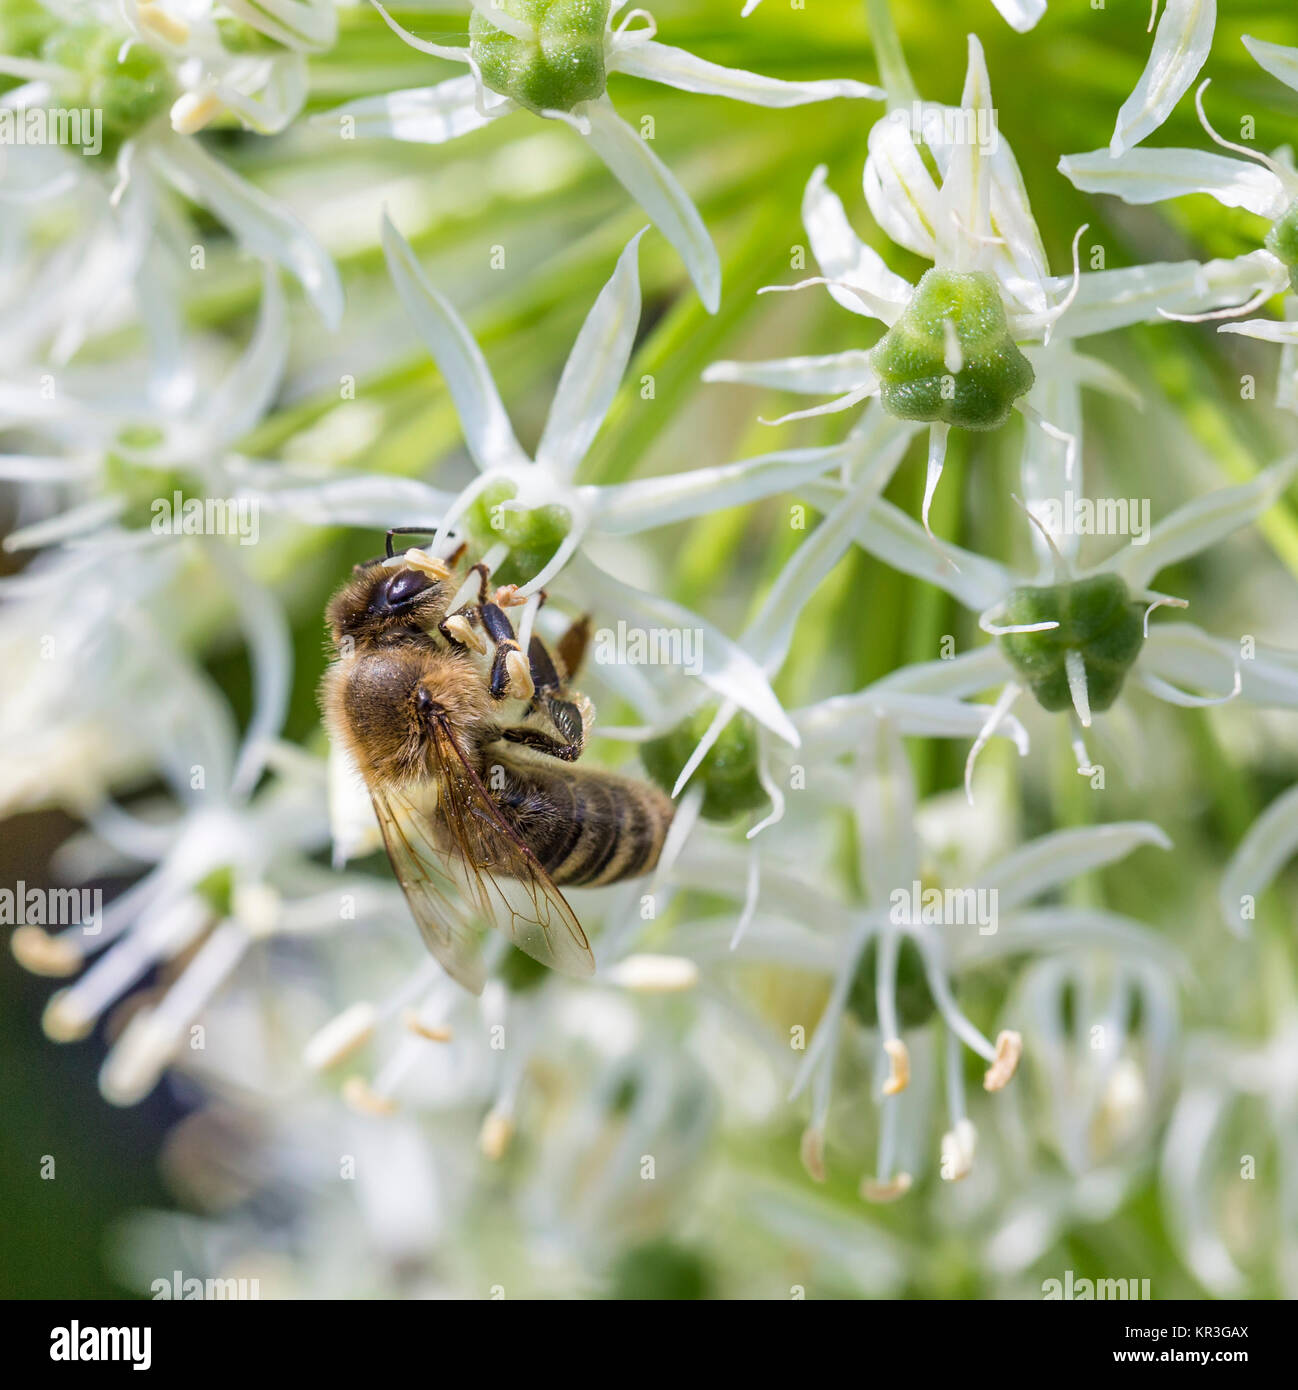 Bees on Allium sphaerocephalon. Allium Drumstick, also known as sphaerocephalon, produces two-toned, Burgundy-Green flower heads. The flowers open green, then start to turn purple. Stock Photo